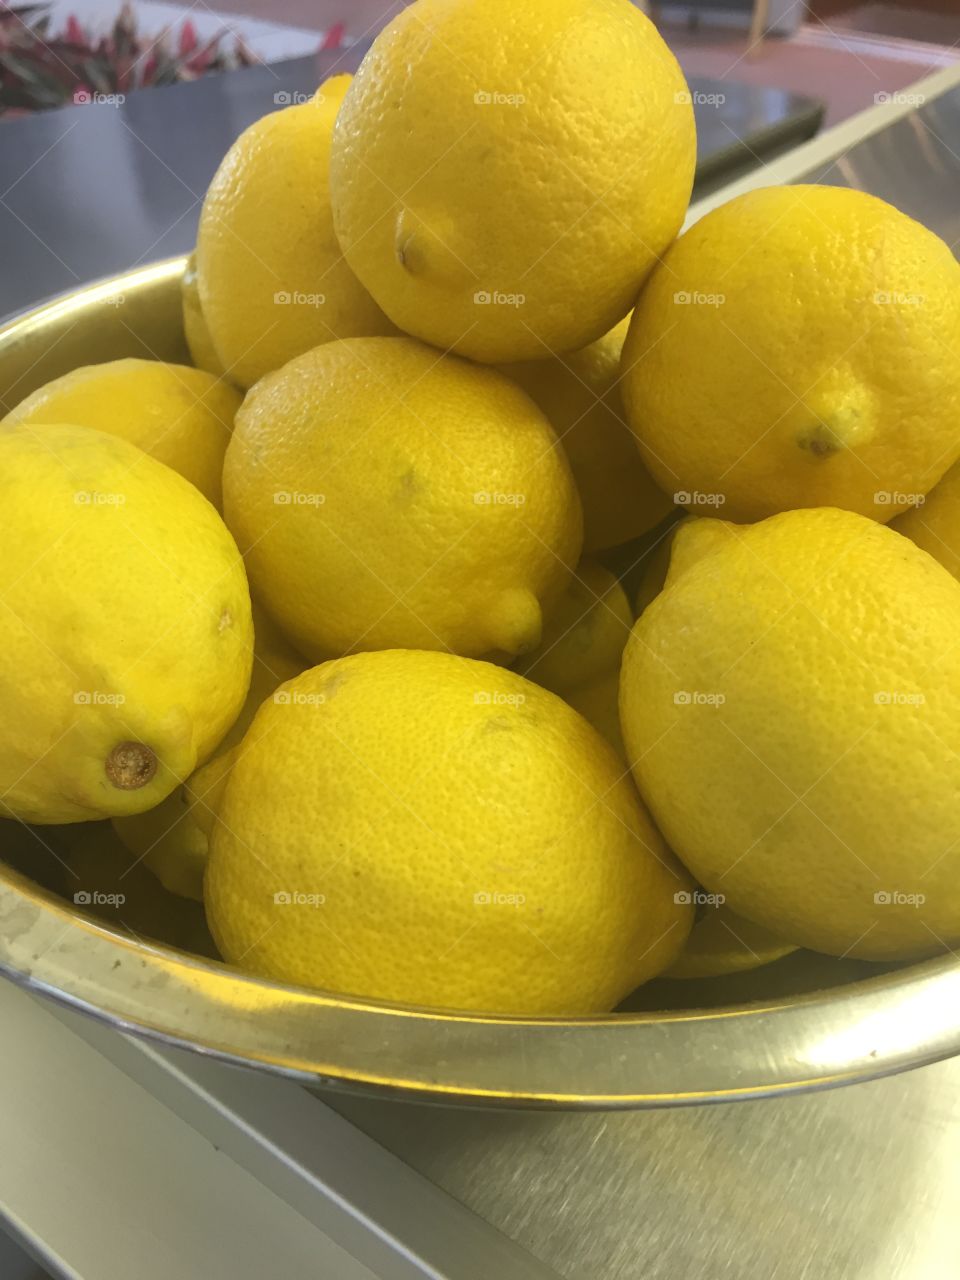 Lemons waiting to become lemonade 